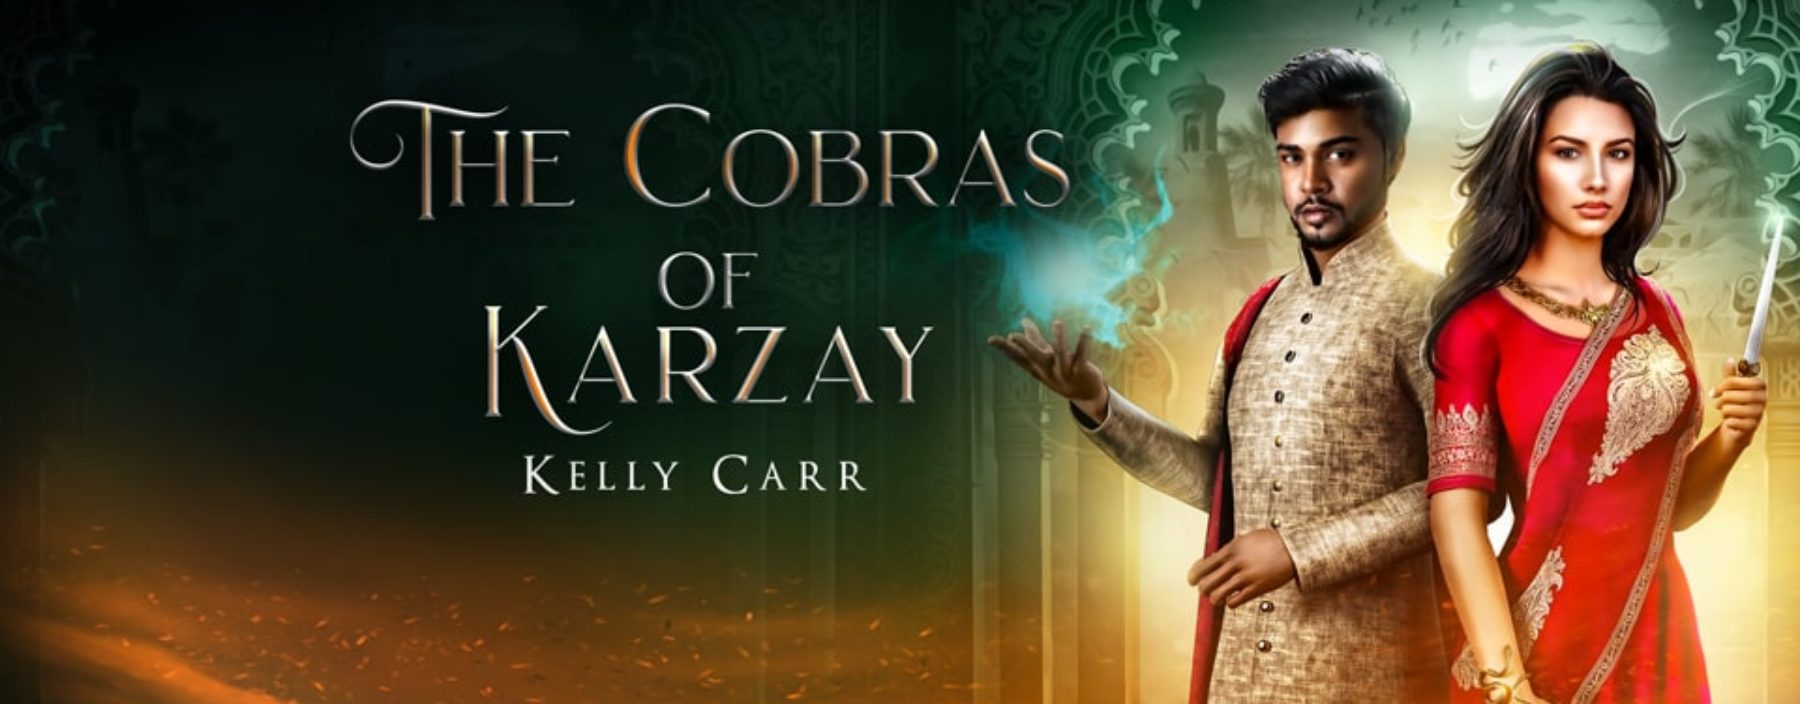 The_Cobras_of_Karzay_facebook_cover